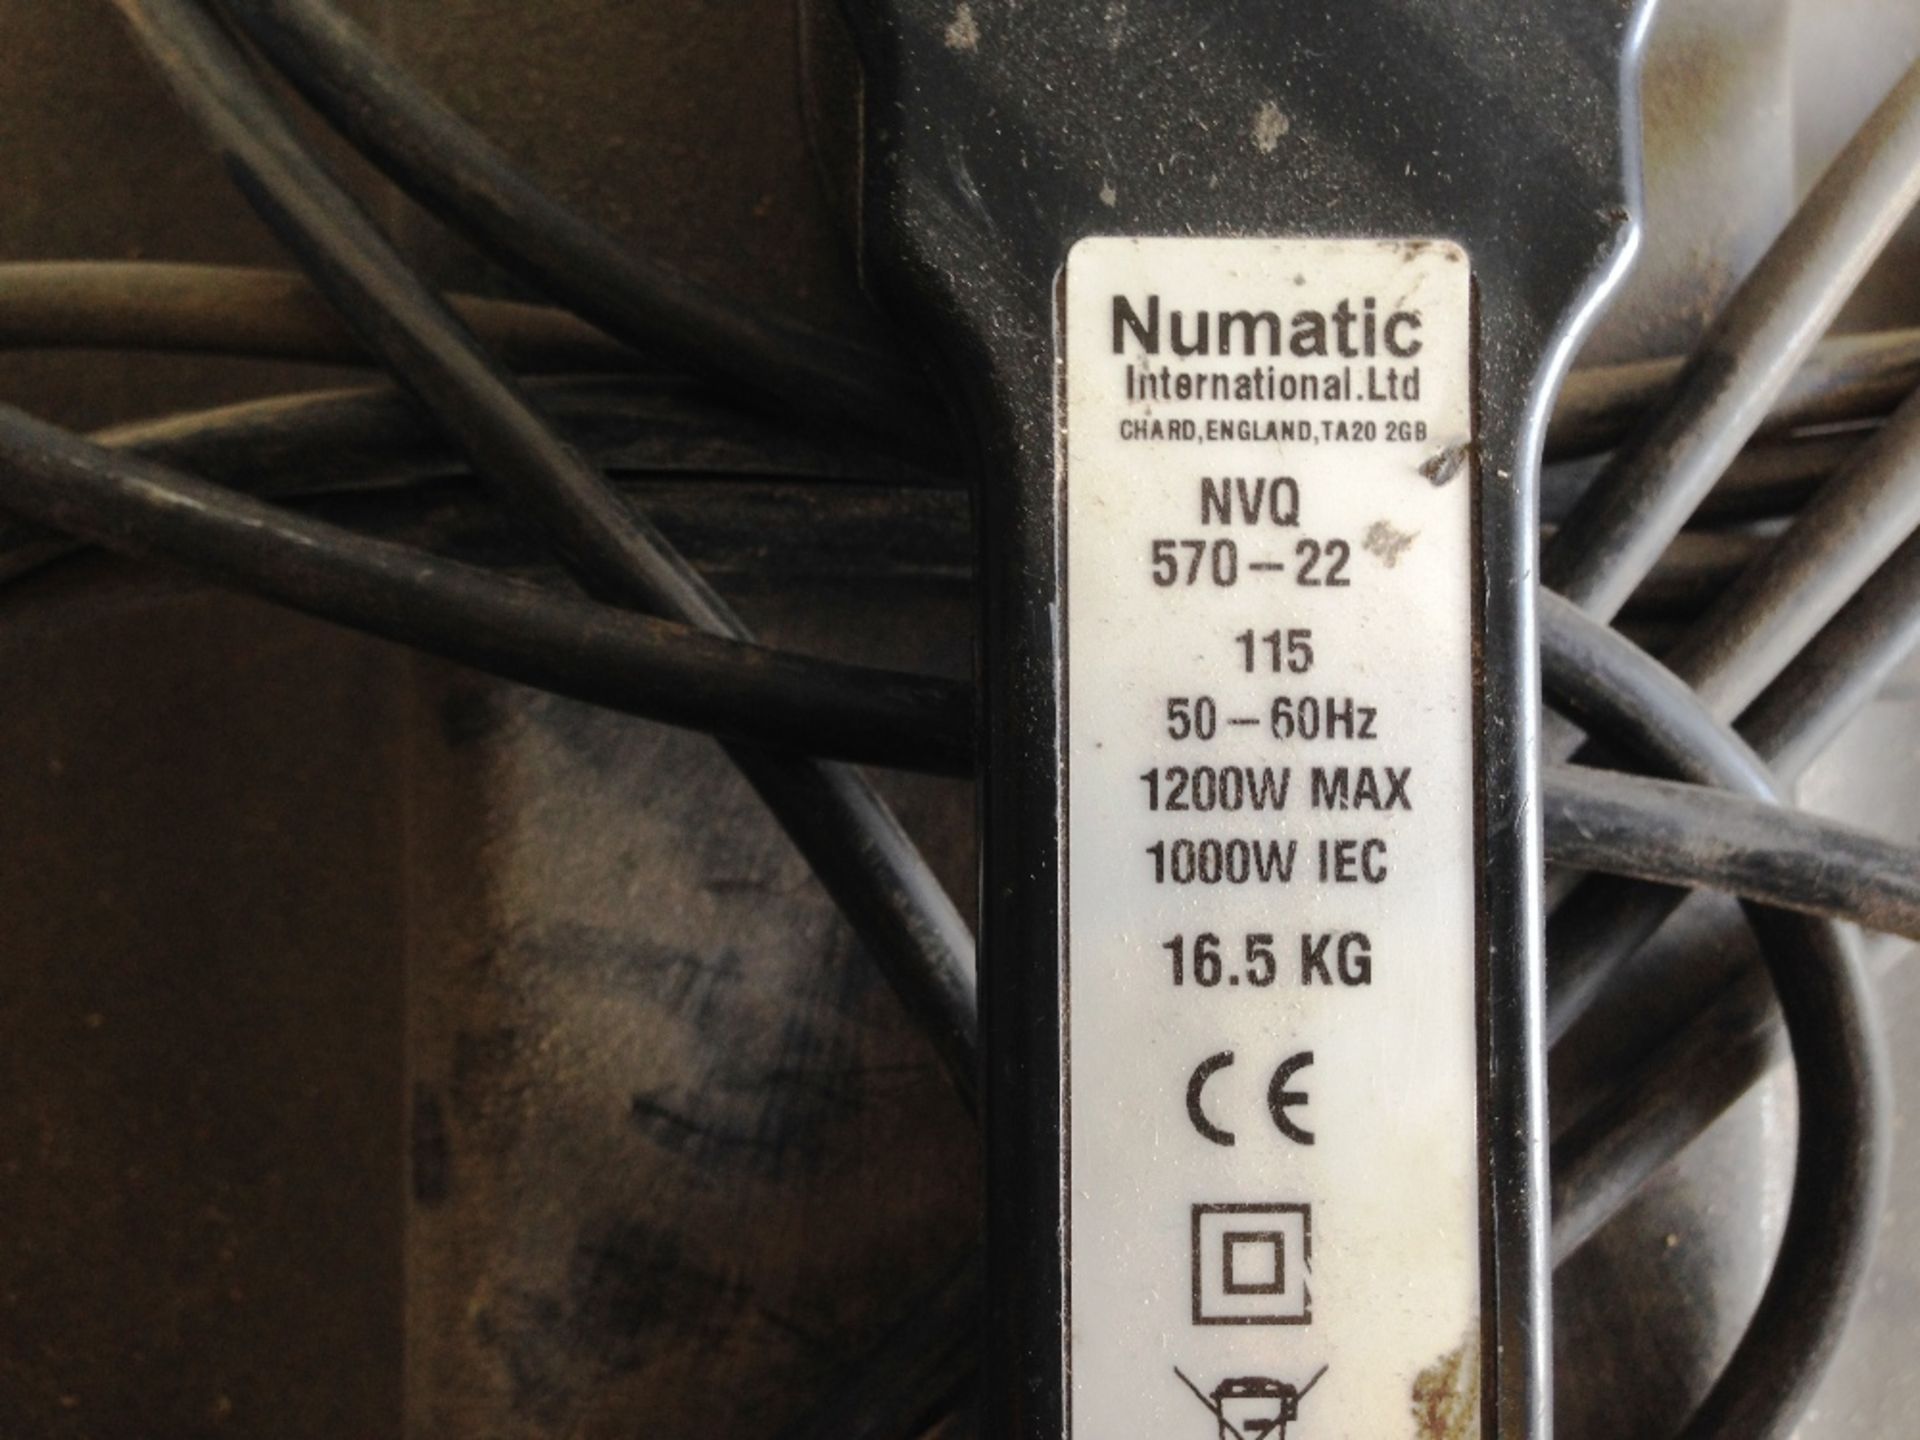 Numatic industrial vacuum cleaner Model: NVQ 570-22 - 110V - no hose - Image 2 of 3